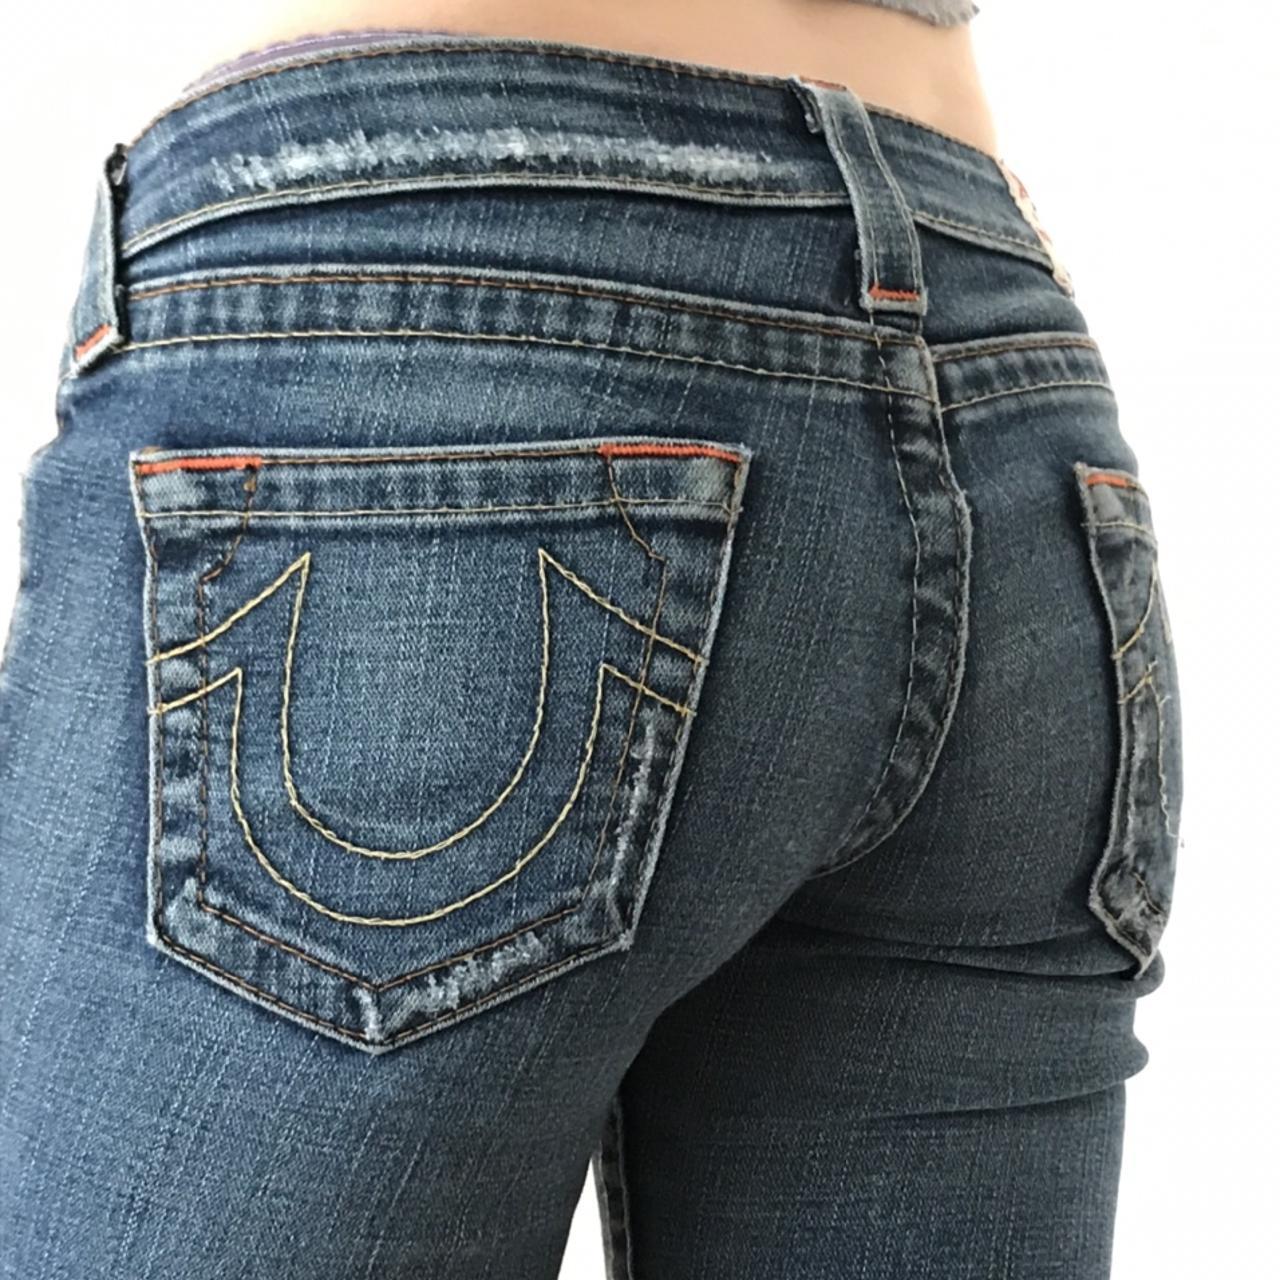 True Religion jeans classic logo pockets one pocket... - Depop